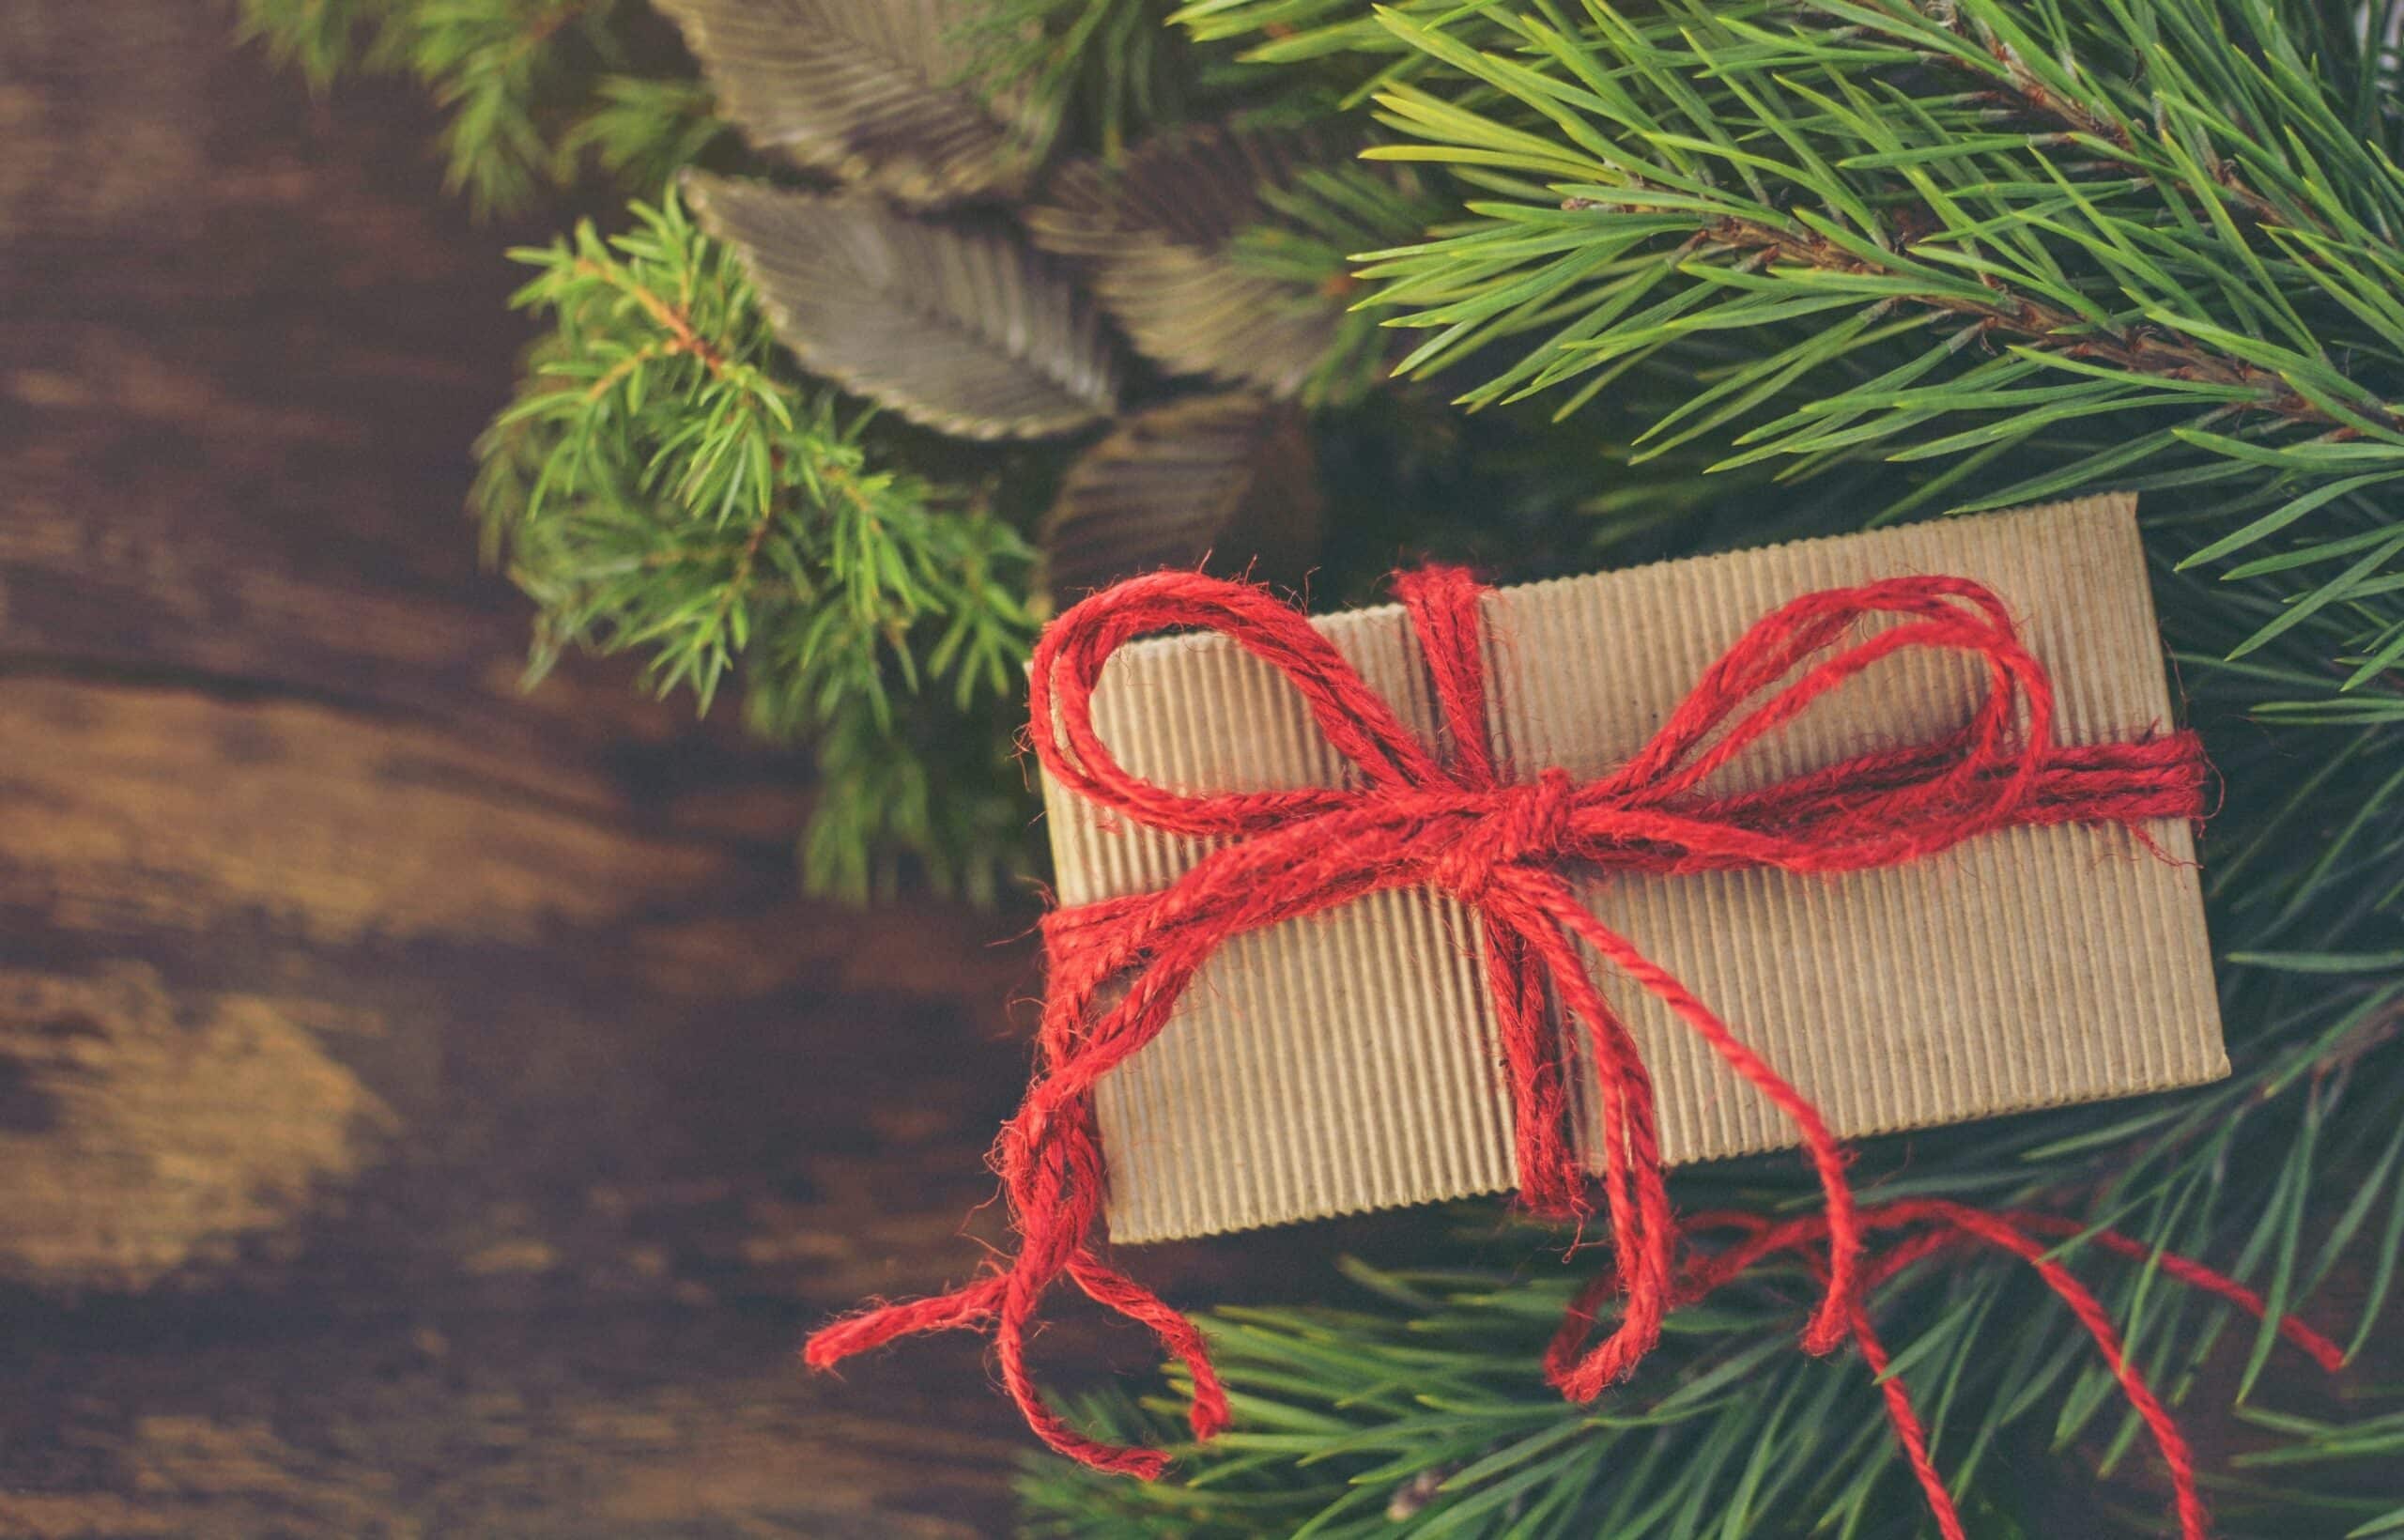 3 handmade gift ideas to make your Christmas ECO friendly